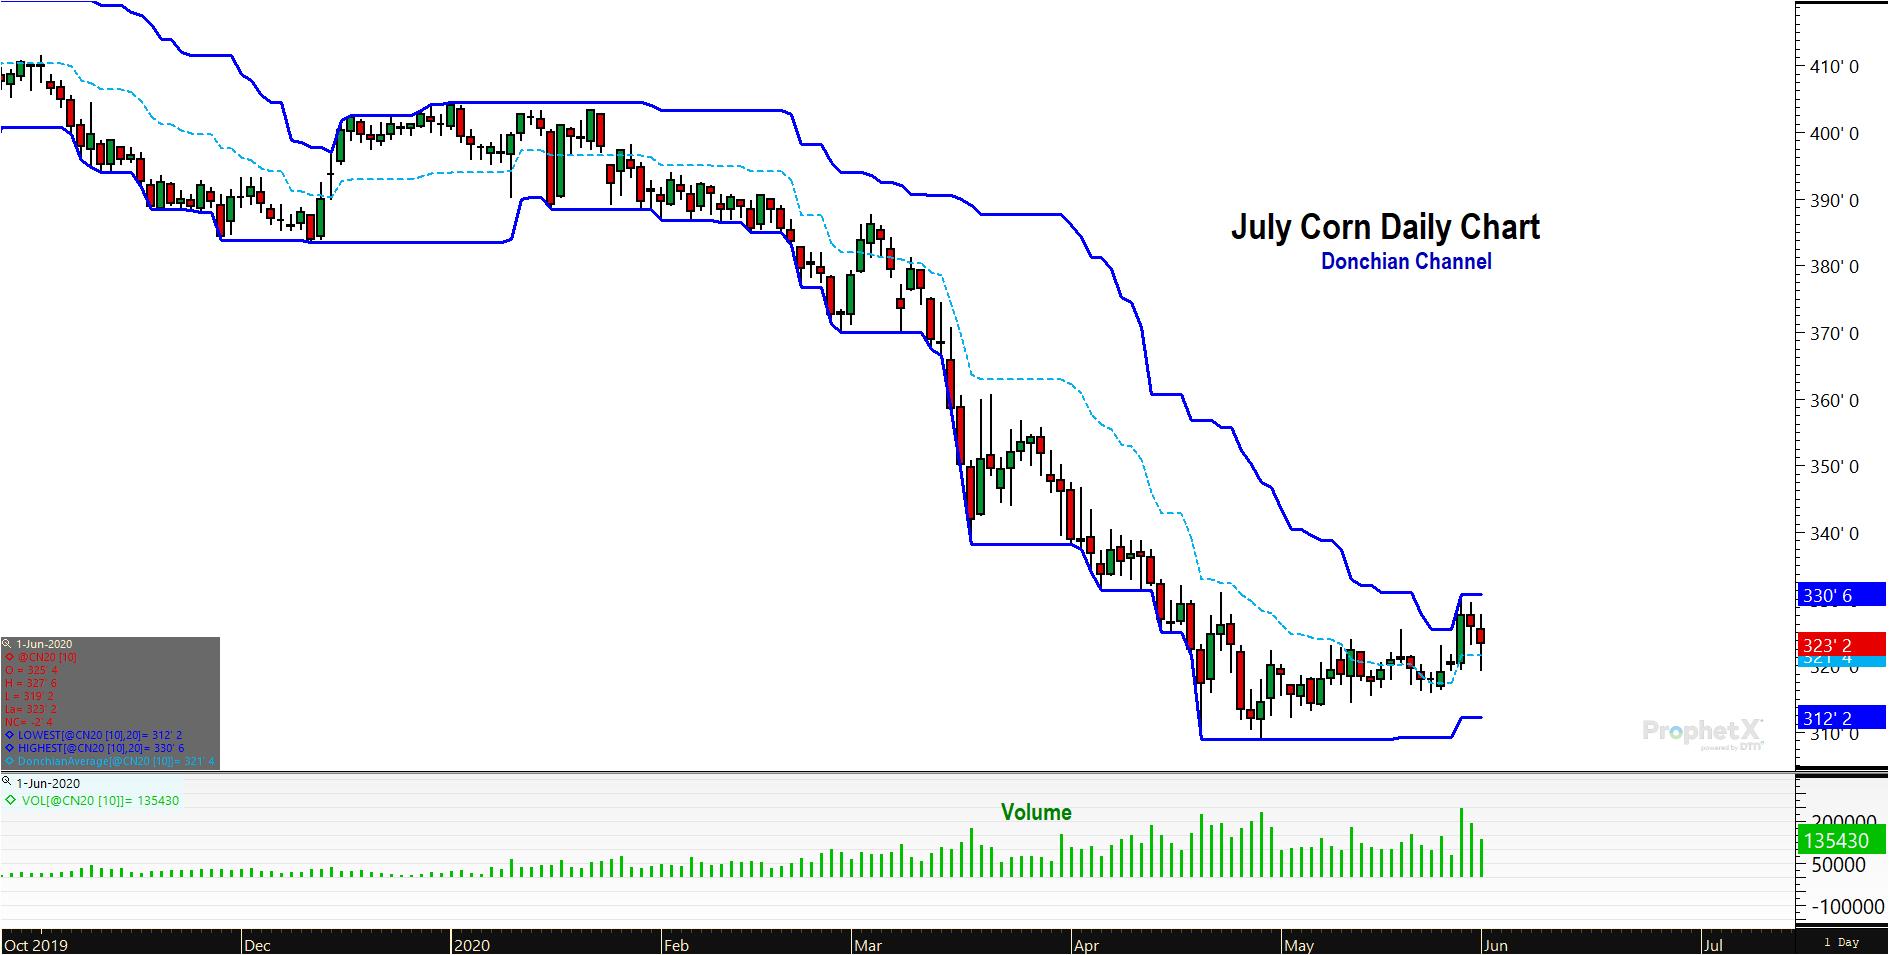 July Corn Futures Donchian Channel